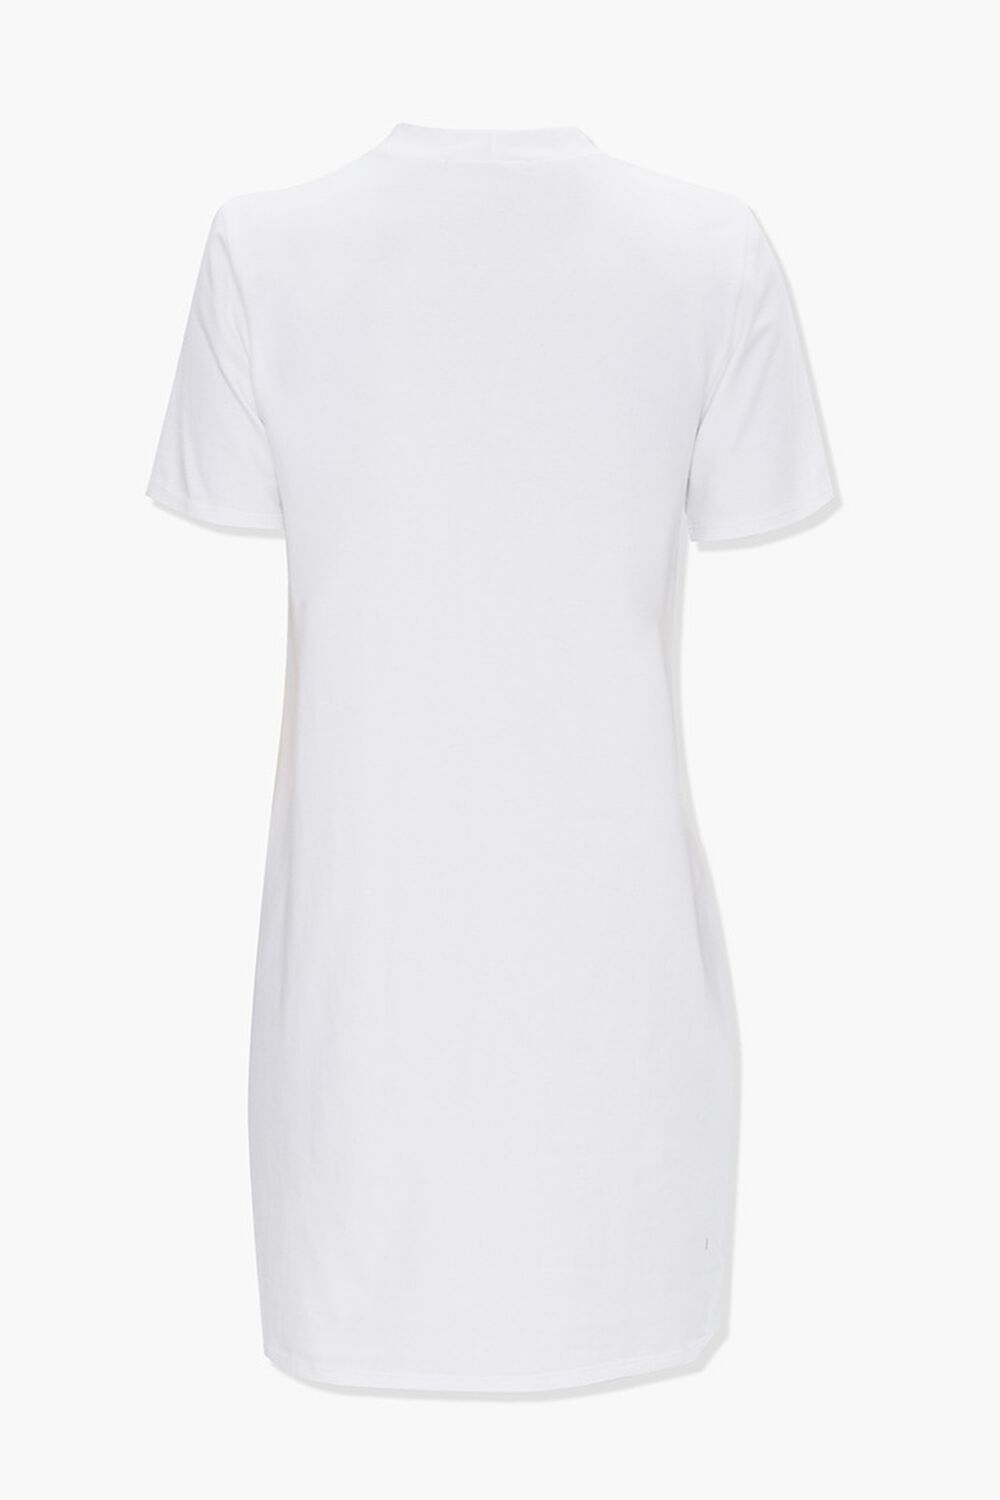 WHITE Shoulder Pad Shirt Dress, image 3